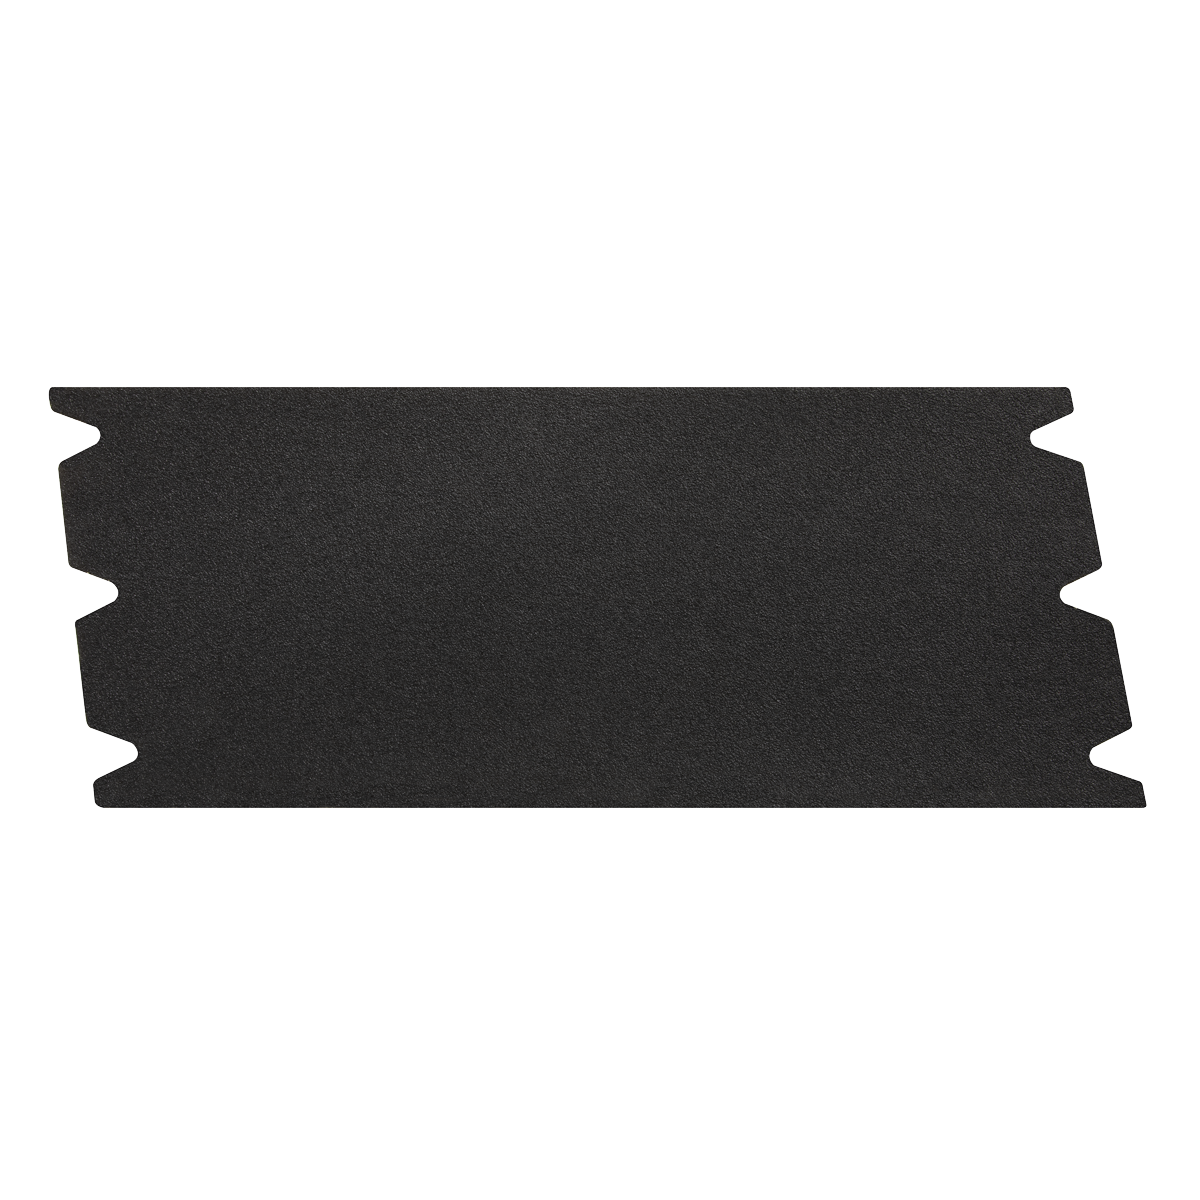 Sealey Floor Sanding Sheet 205 x 470mm 100Grit - Pack of 25 DU8100EM